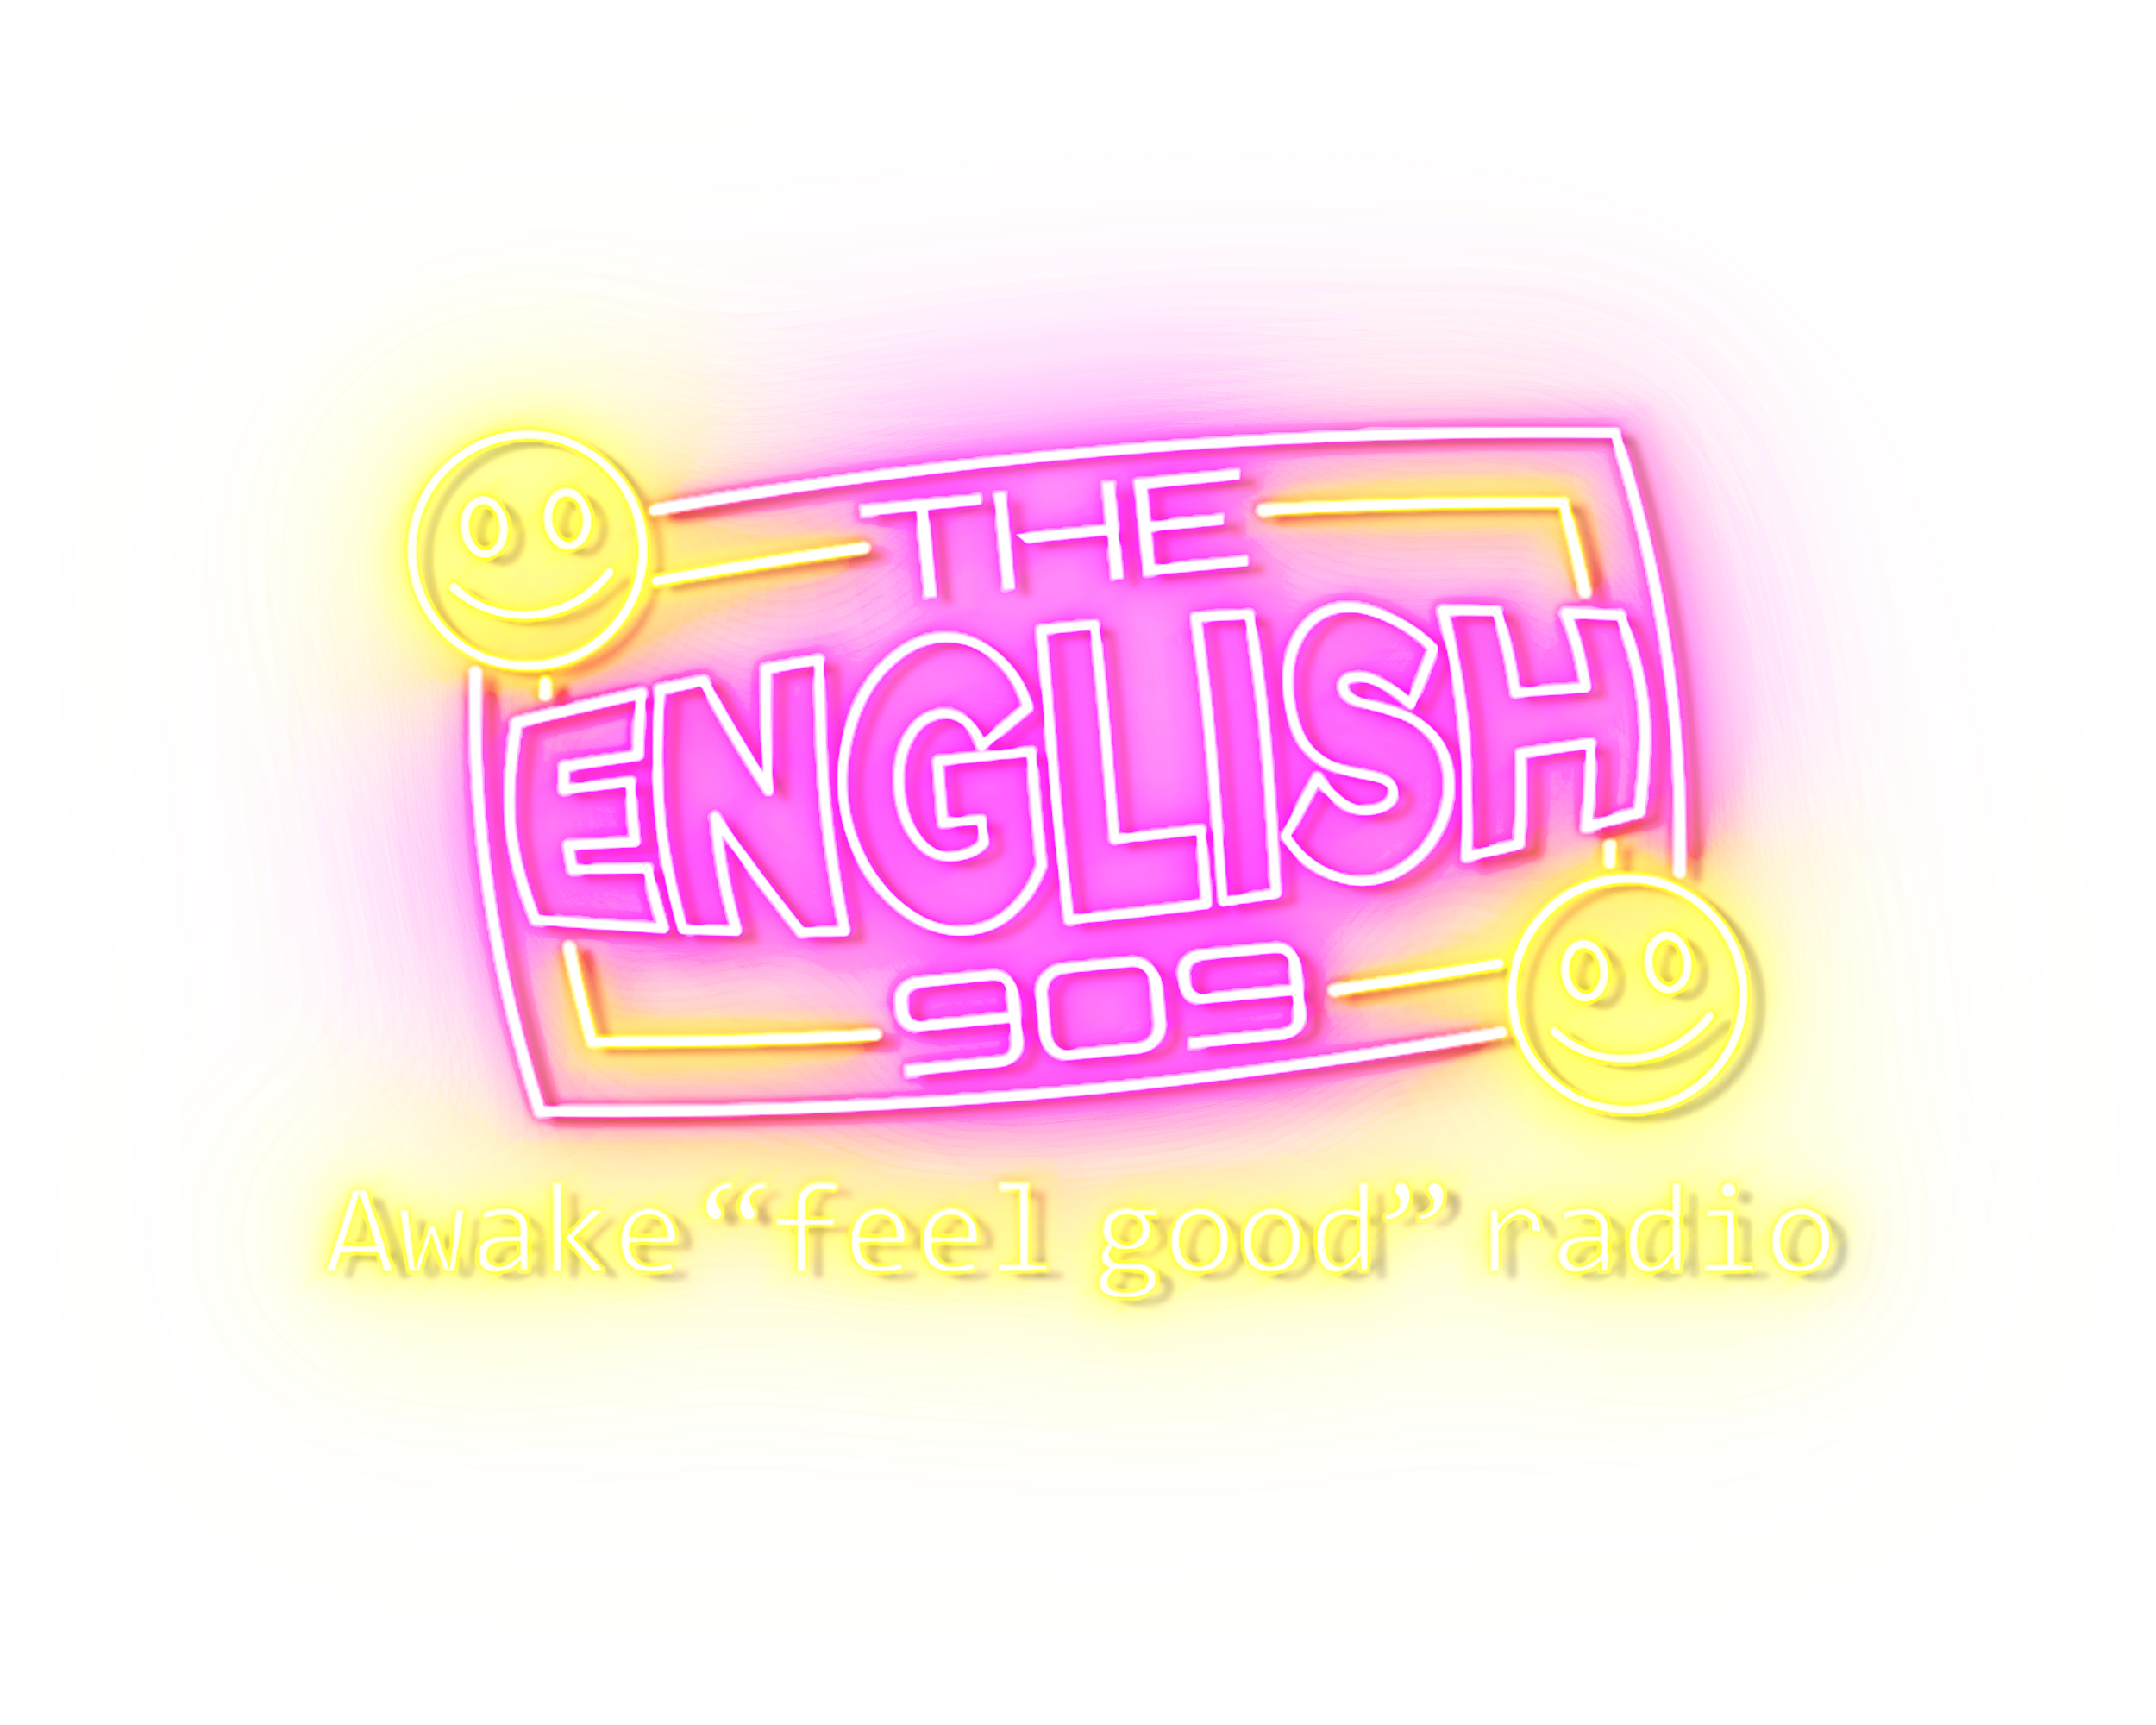 Radio for Awakened Souls